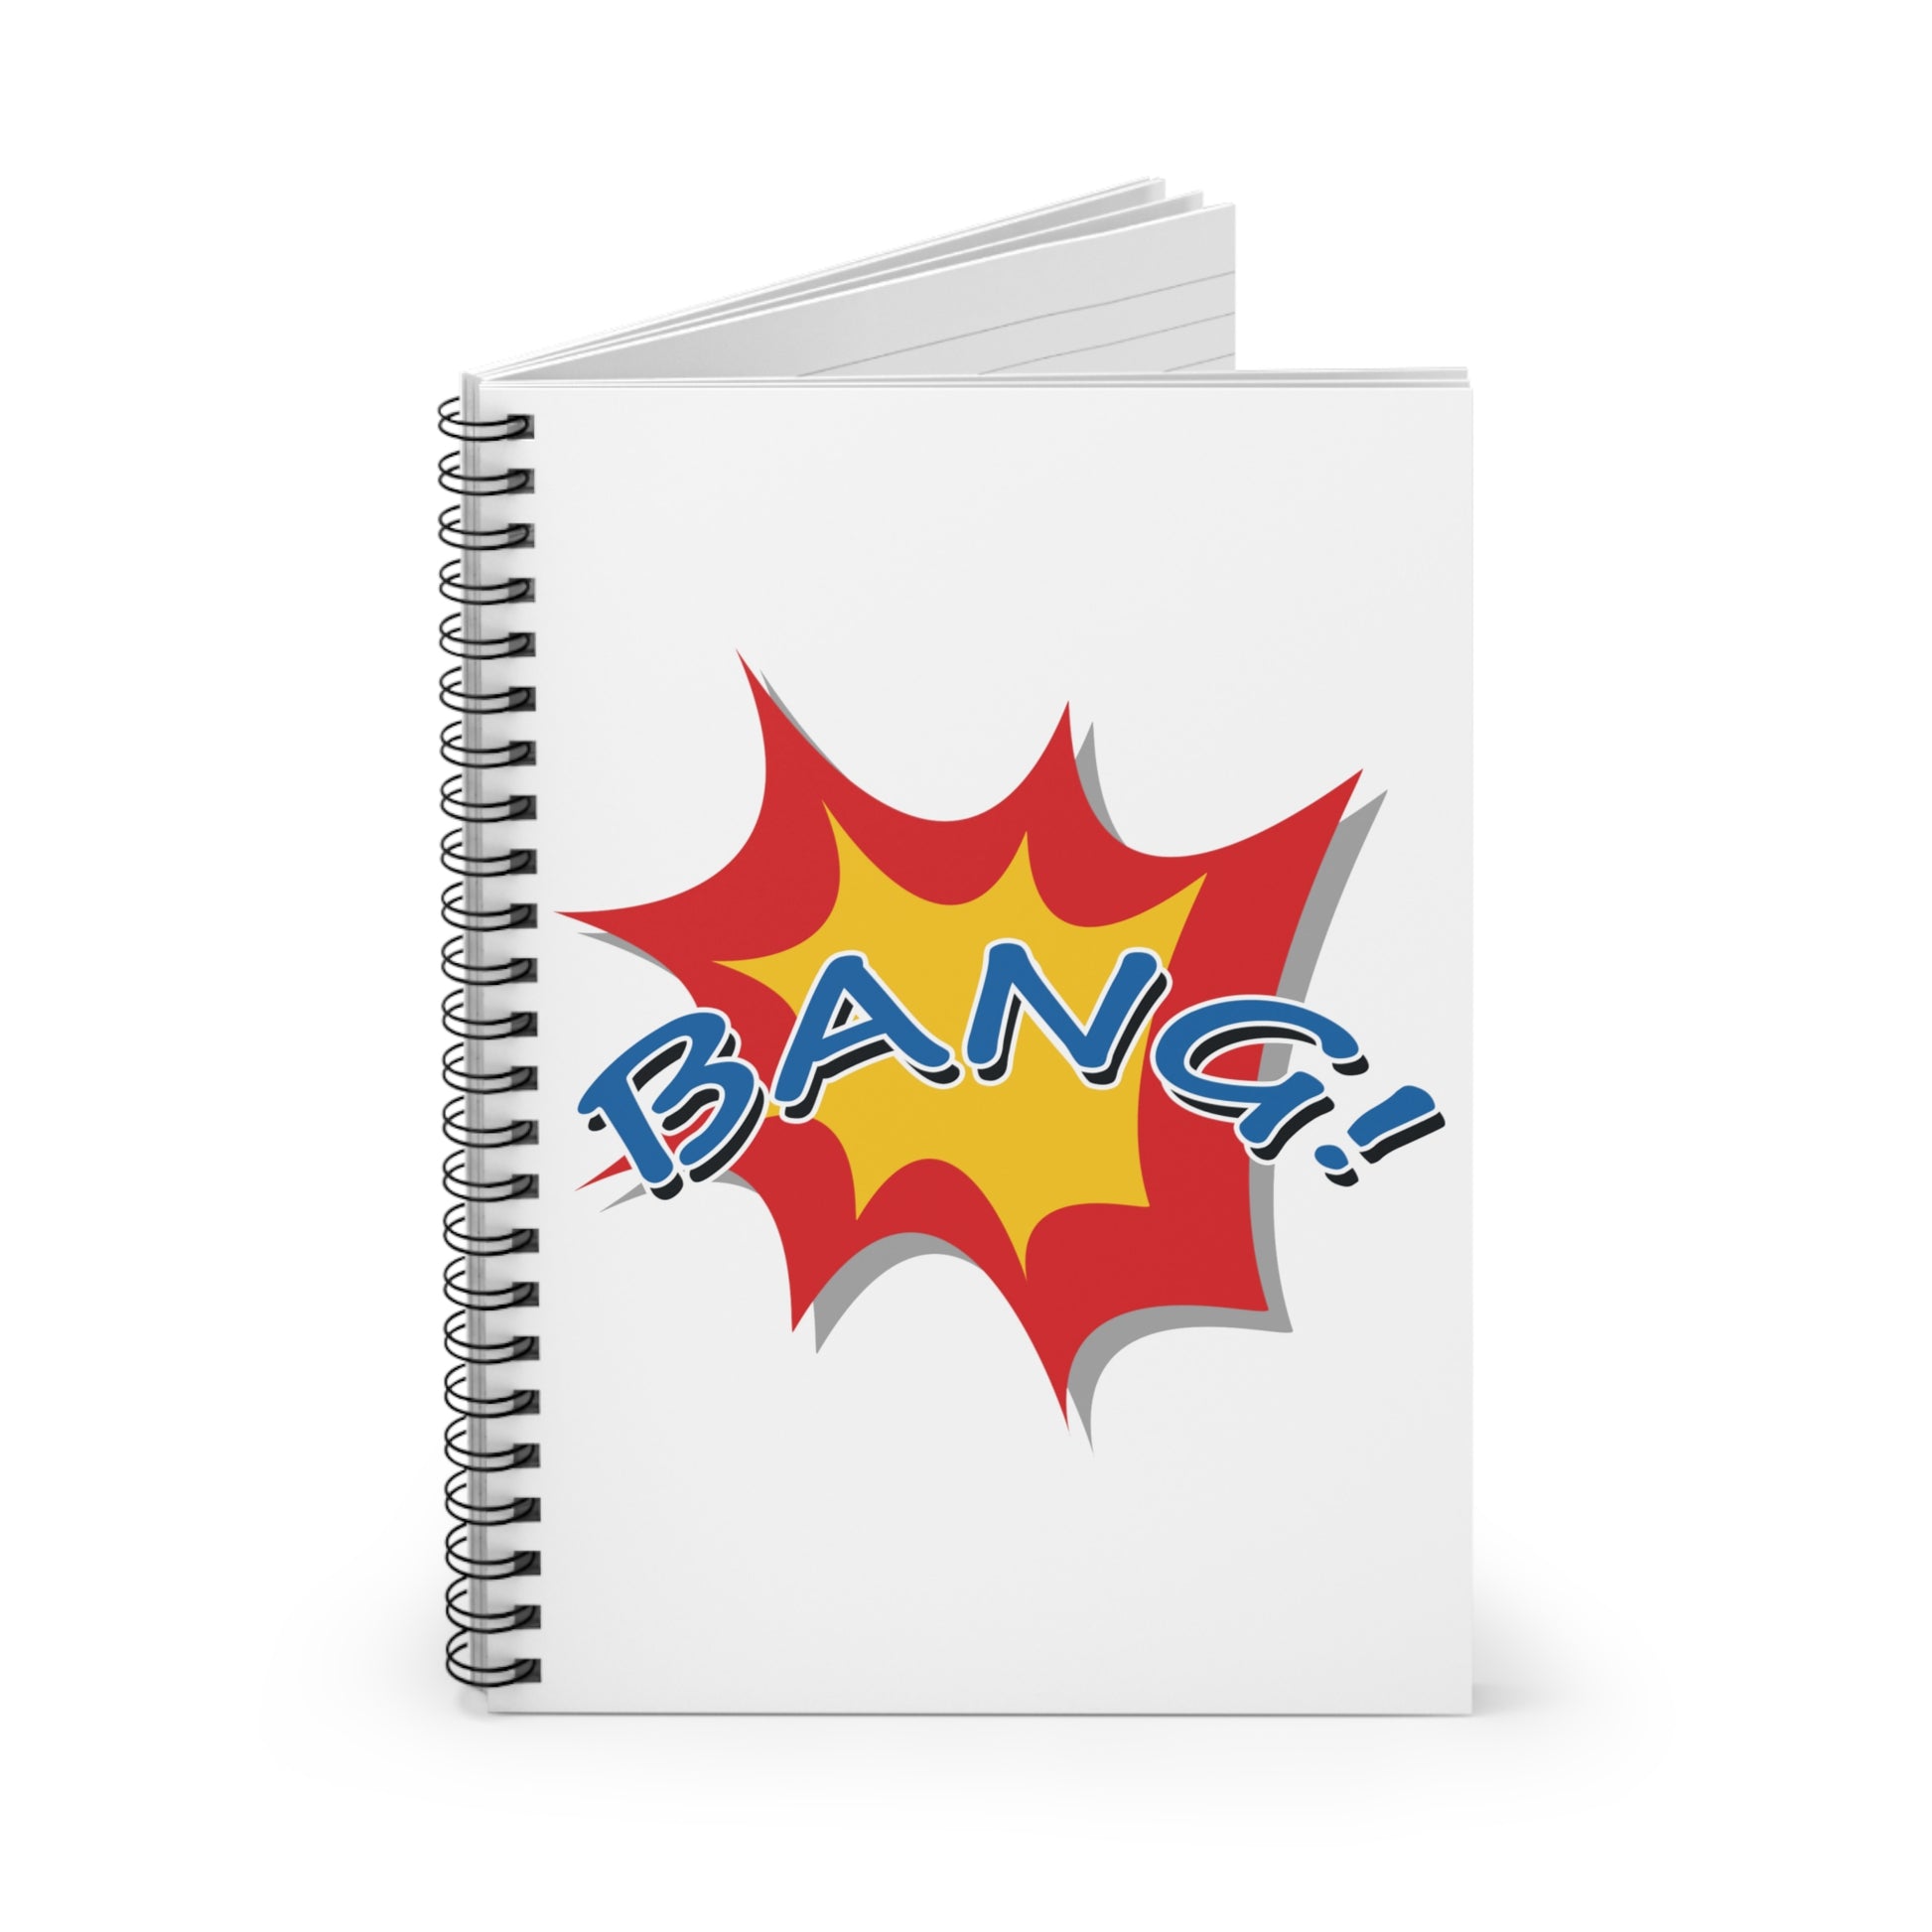 Superhero BANG: Spiral Notebook - Log Books - Journals - Diaries - and More Custom Printed by TheGlassyLass